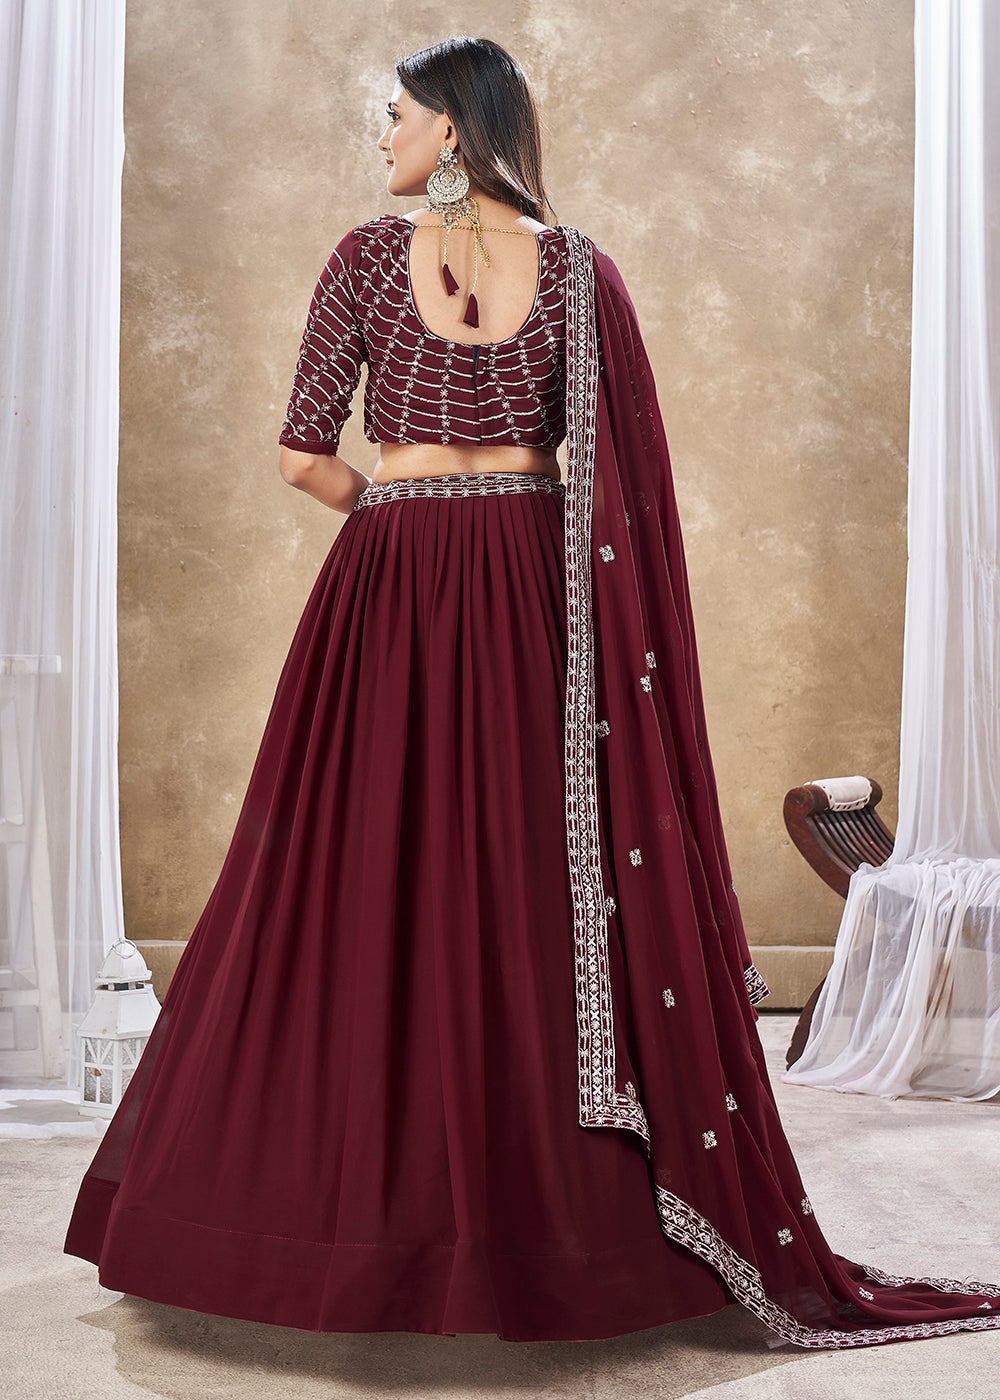 Buy Now Wedding Festive Style Red Embroidered Lehenga Choli Online in USA, UK, Canada & Worldwide at Empress Clothing.